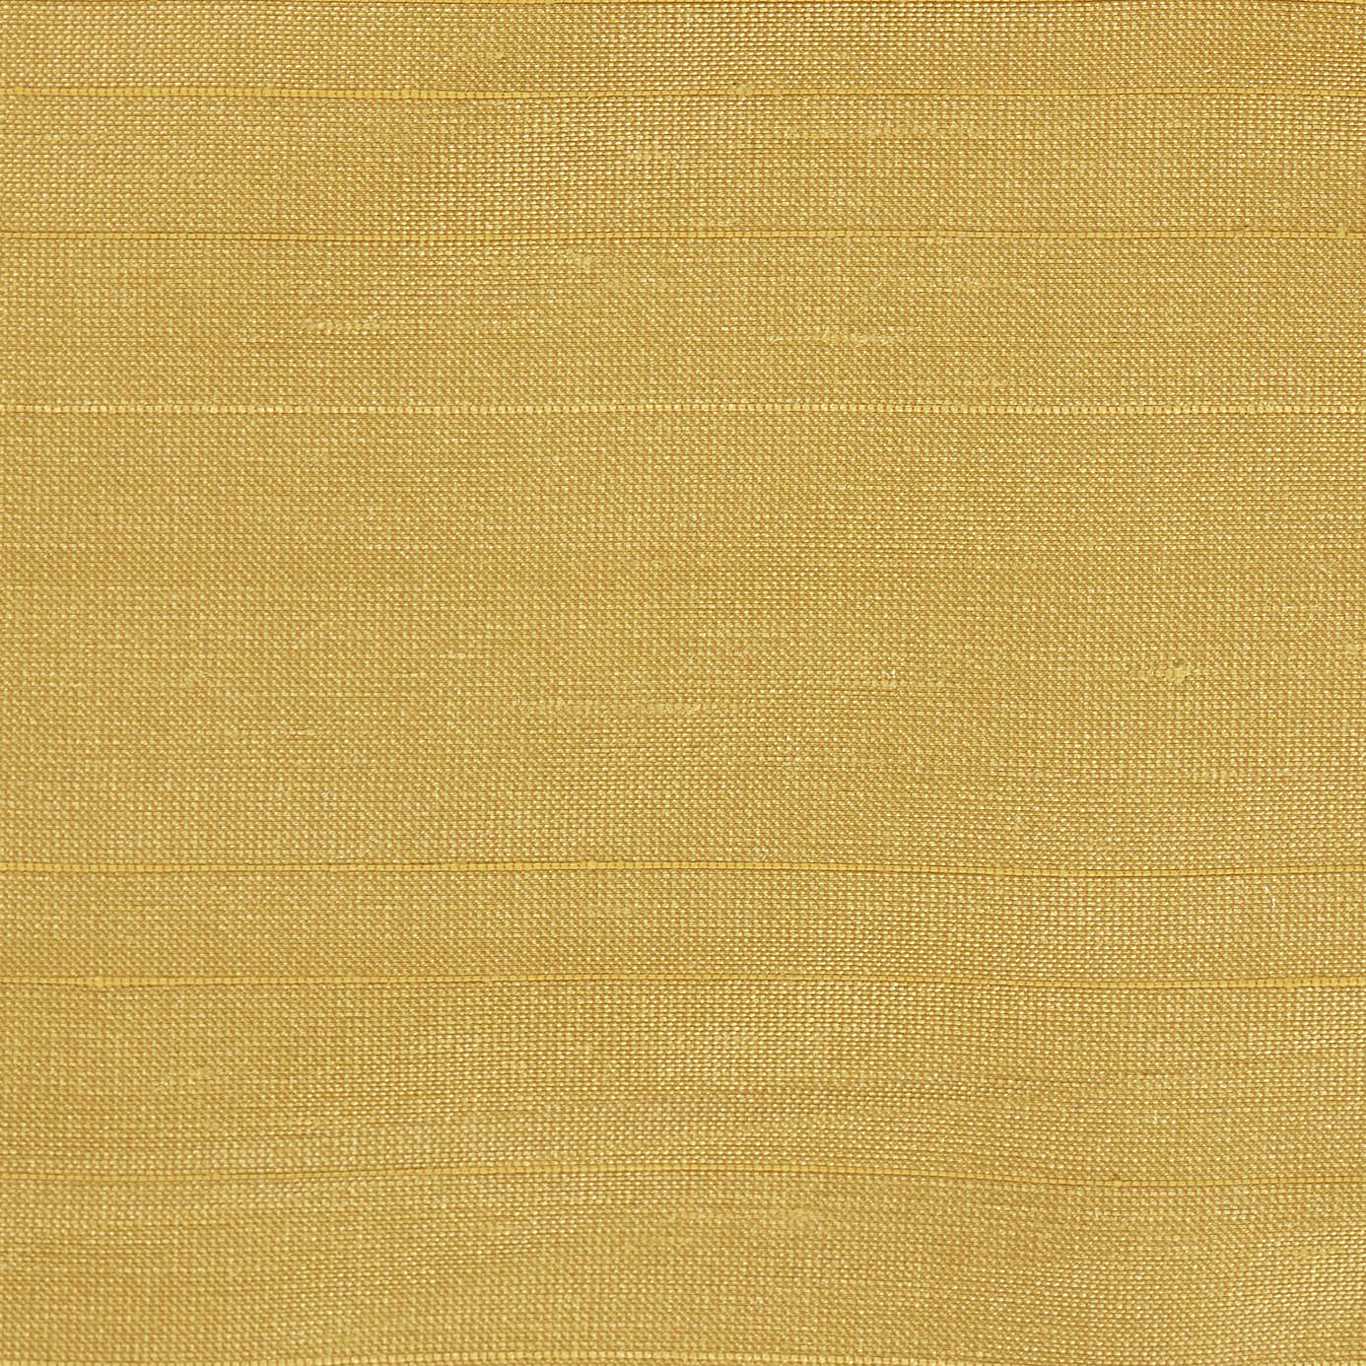 Deflect Fabric by Harlequin - HPOL440401 - Mustard